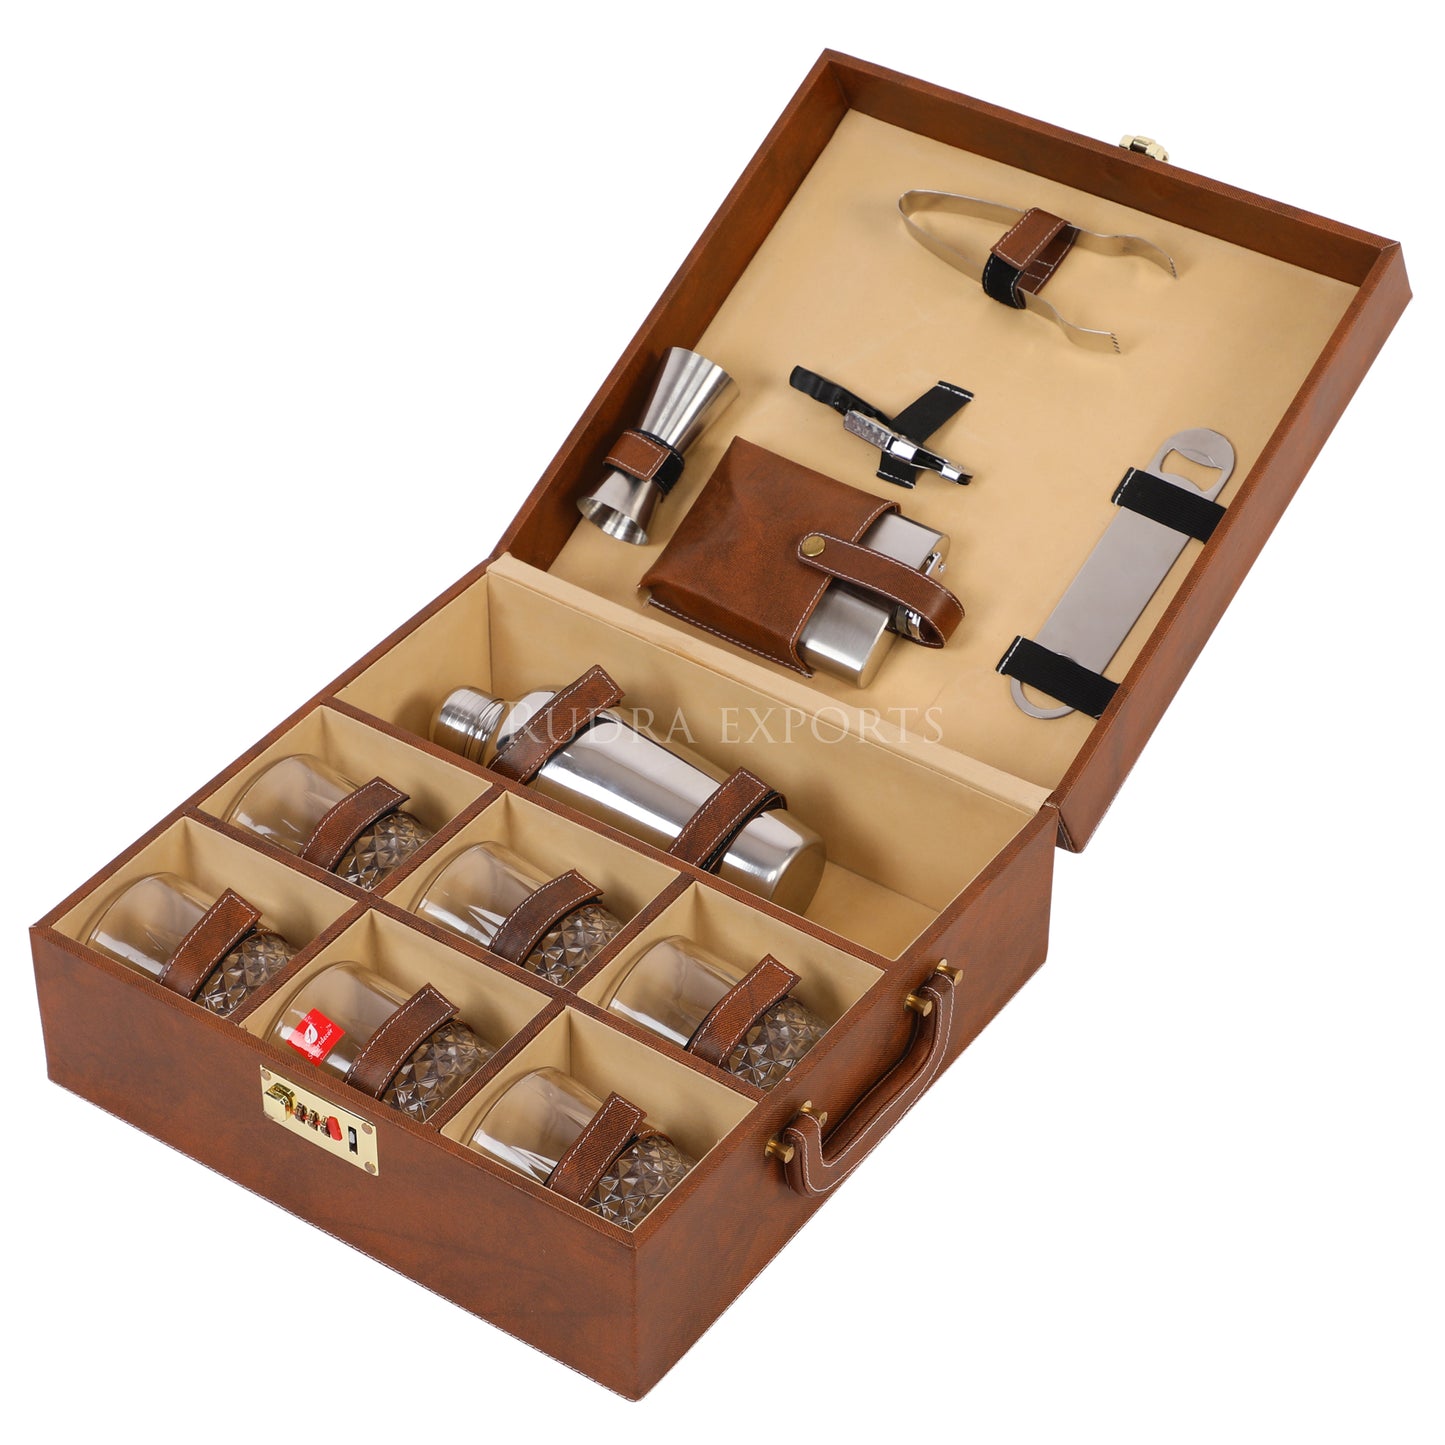 Rudra Exports 6 Glasses Brown Bar Set | Premium Bar Set , Portable Leatherette Bar Set, Travel Bar Set for car | Whiskey Glasses (Brown)